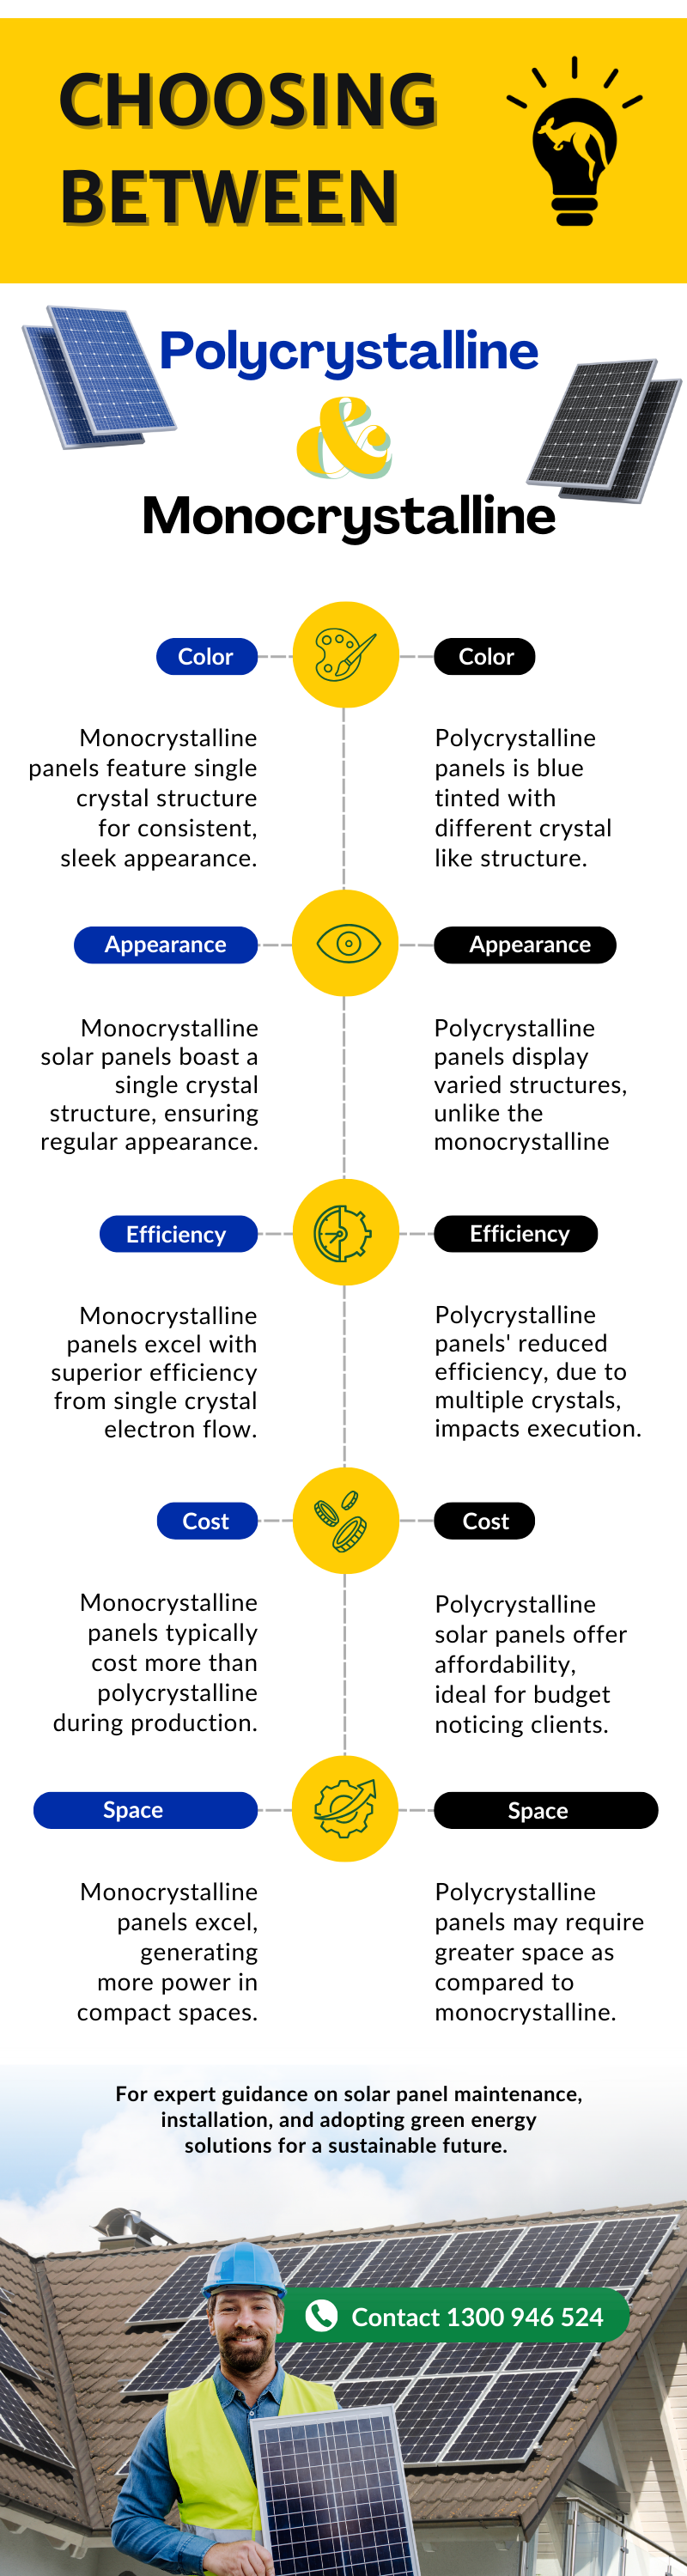 compare polycrystalline and monocrystalline solar panels